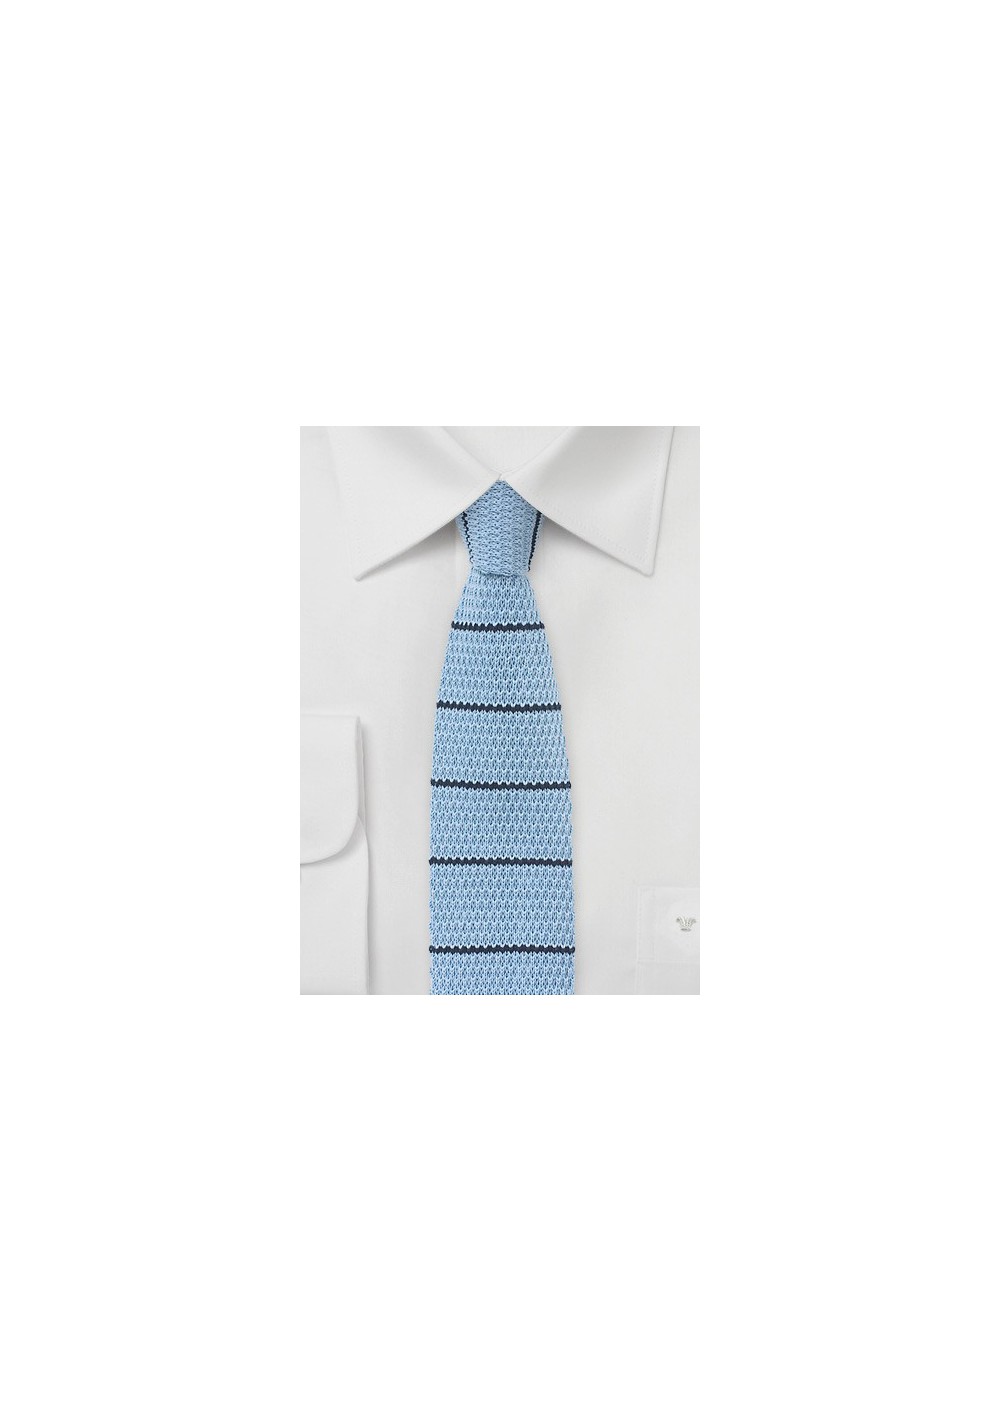 Light Blue Knit Tie with Navy Stripes